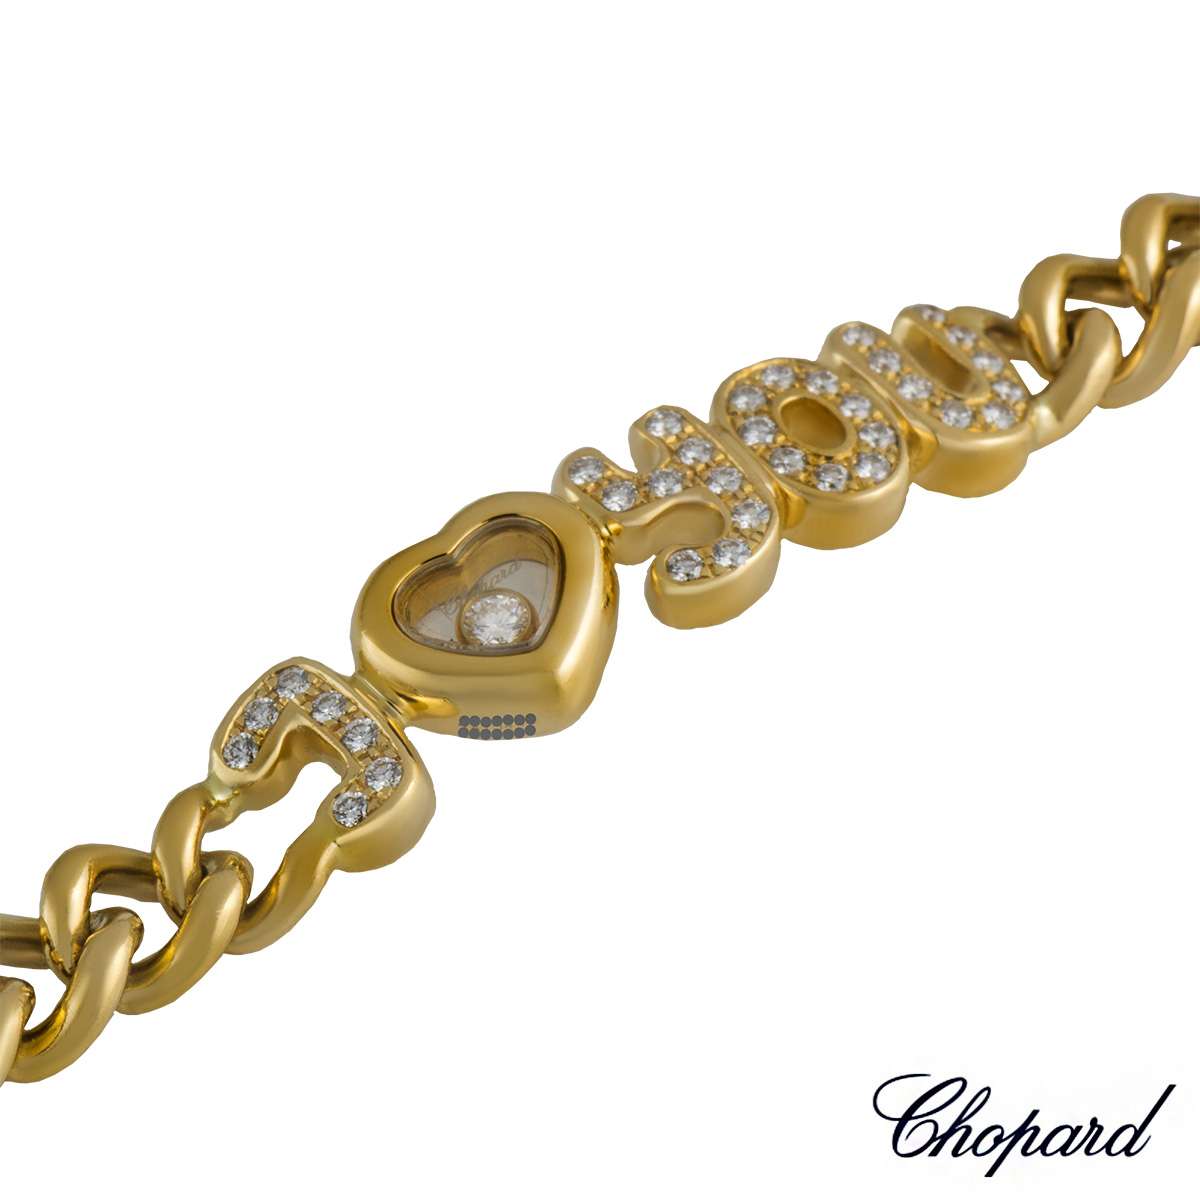 18K Yellow Gold Chopard I Love You Bracelet